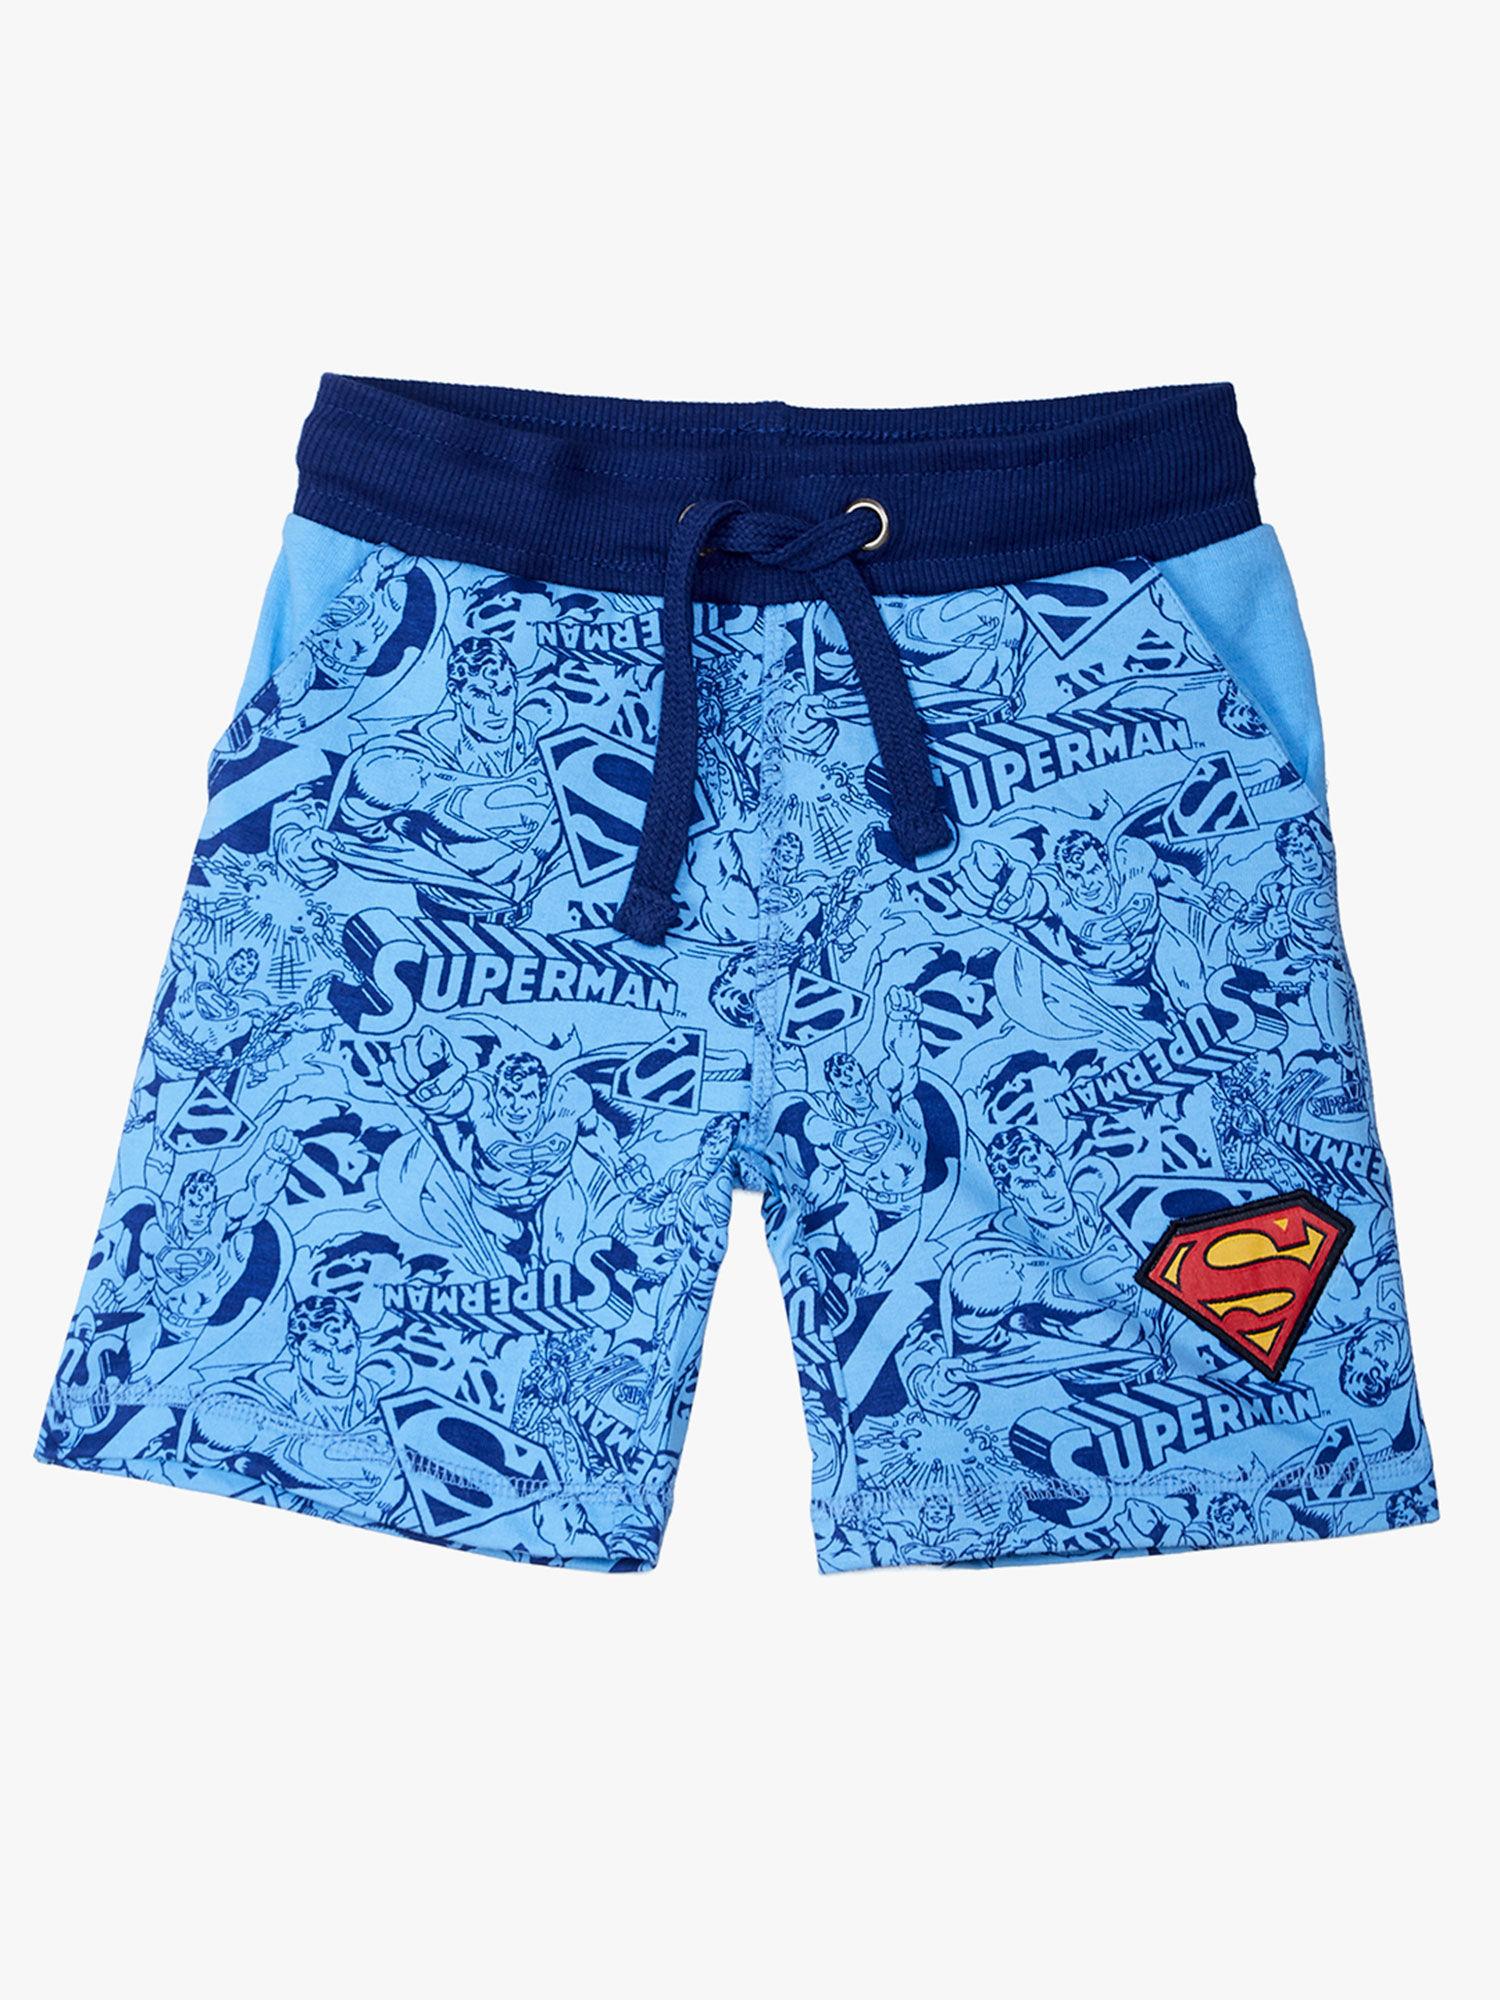 superman blue shorts